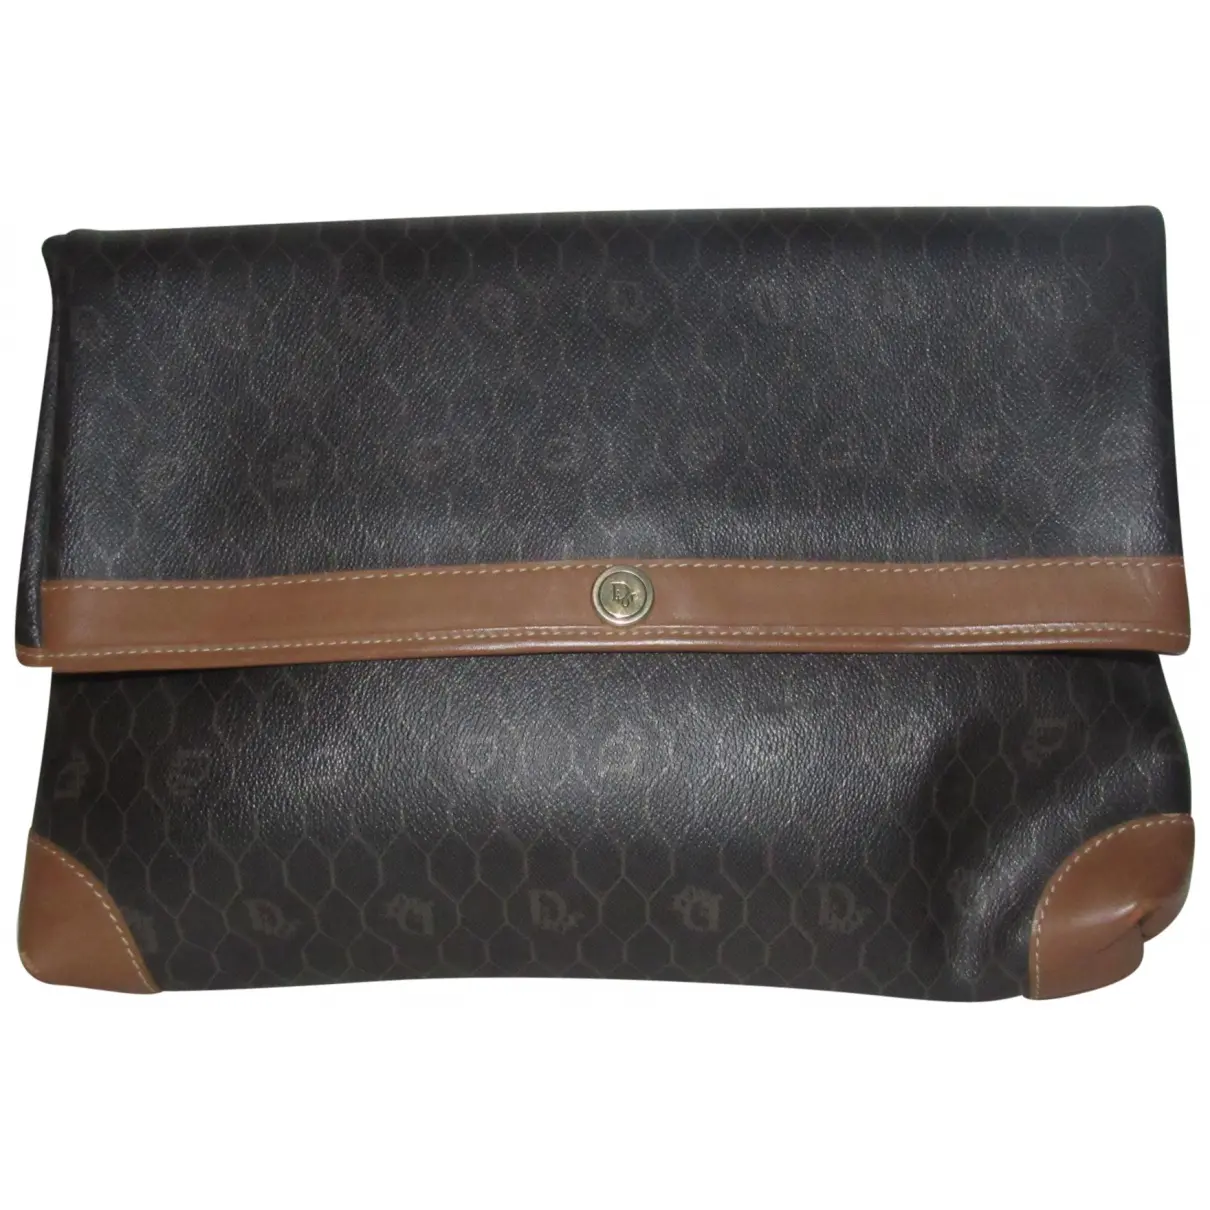 DiorAddict leather clutch bag